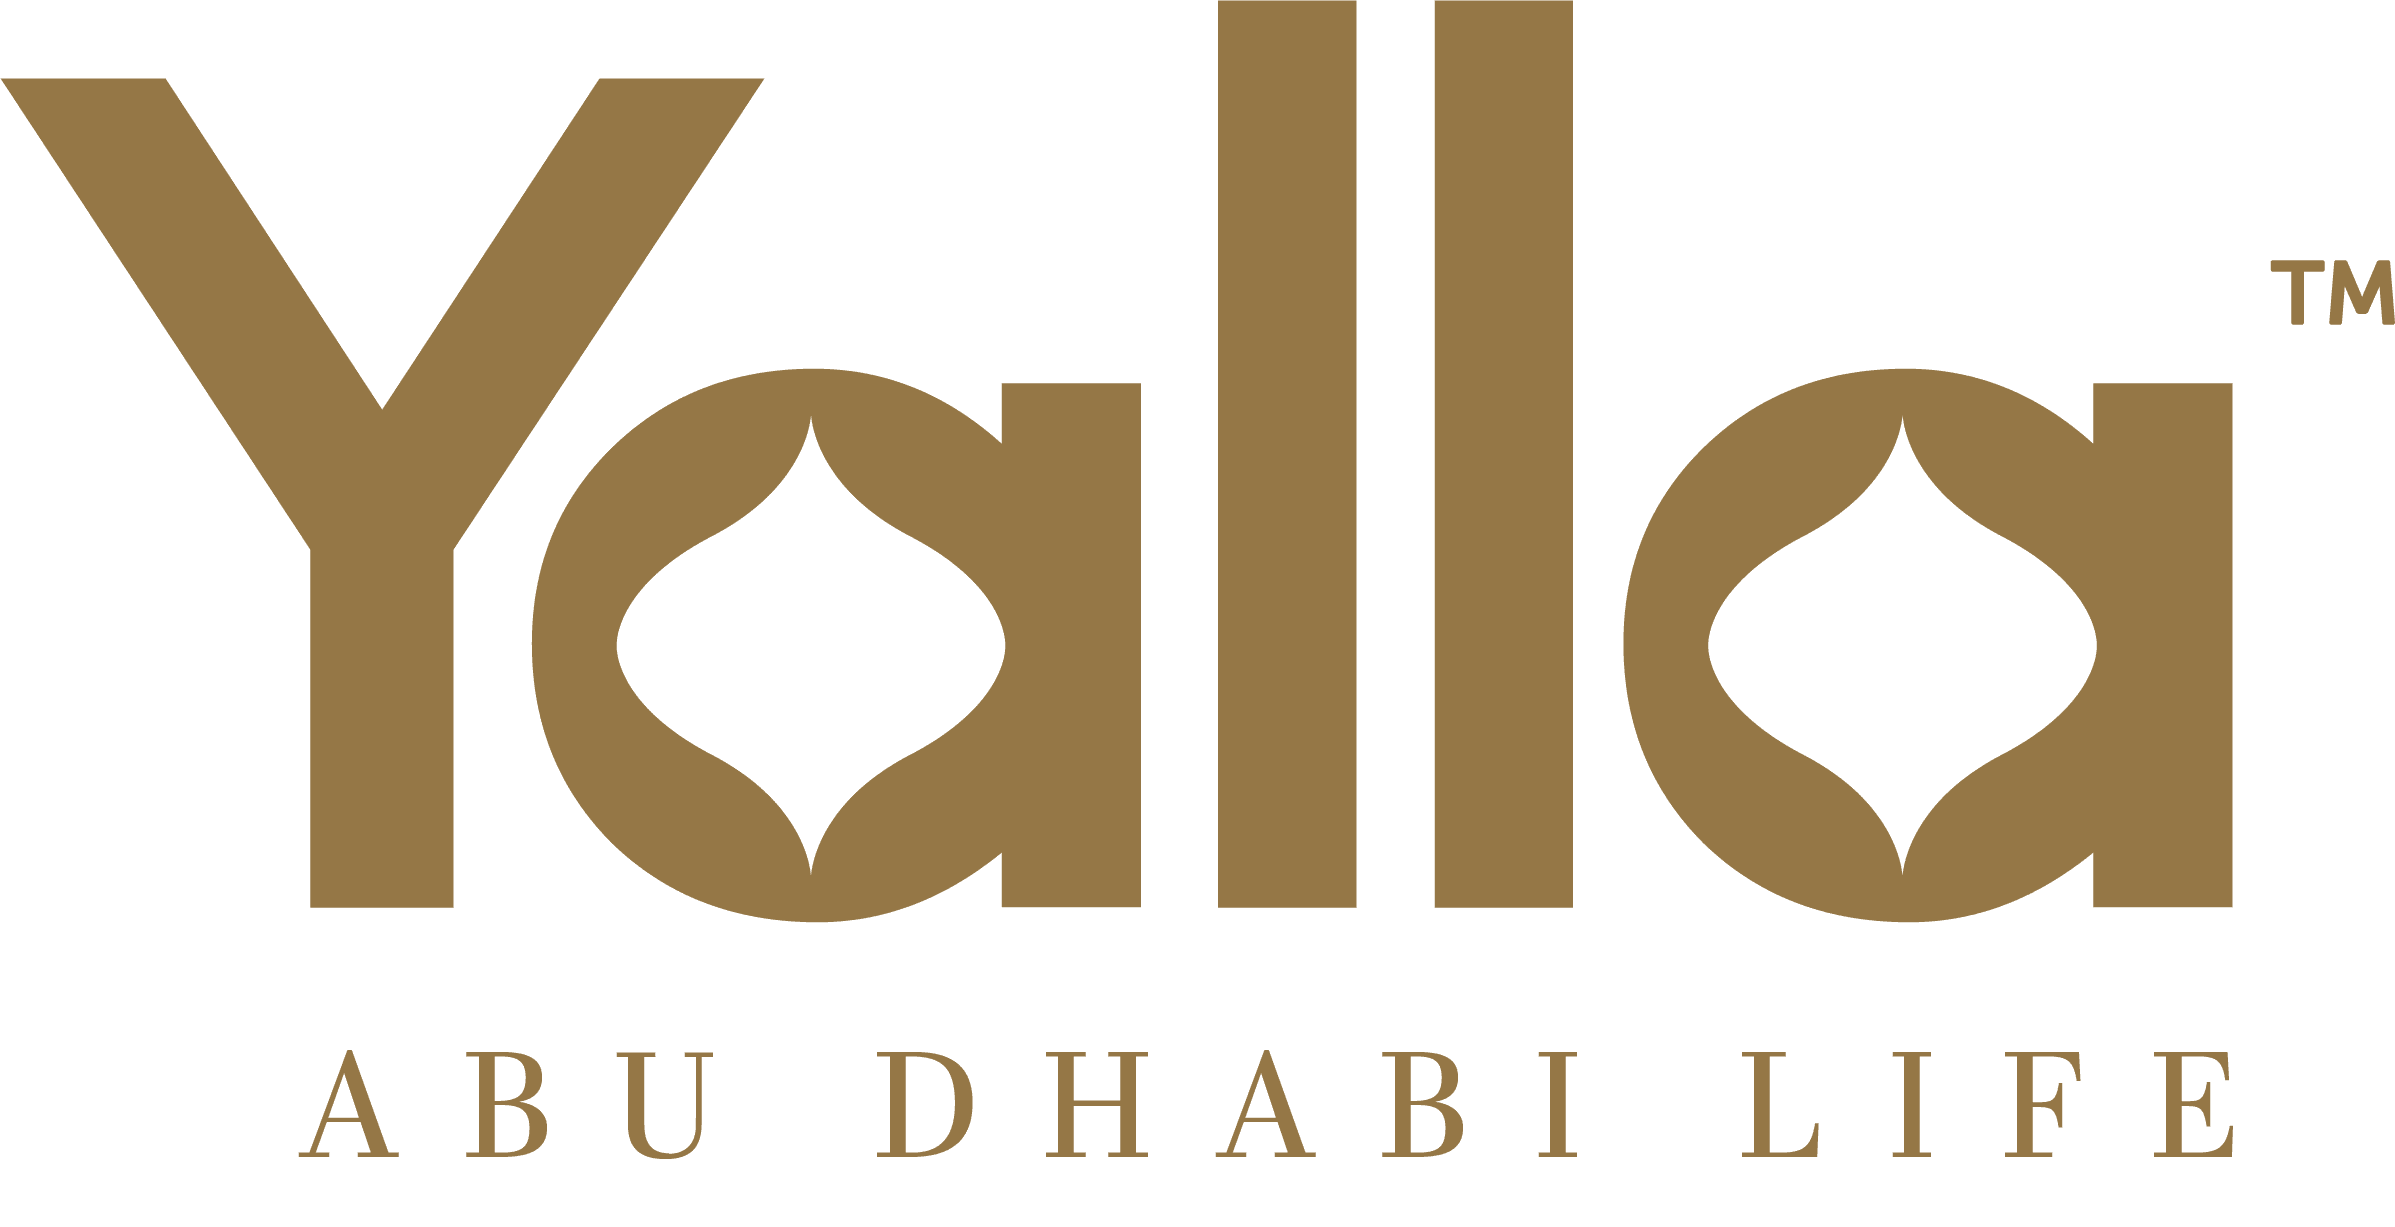 Yalla – Abu Dhabi Life and Abu Dhabi Mall presents The Art of Recycling